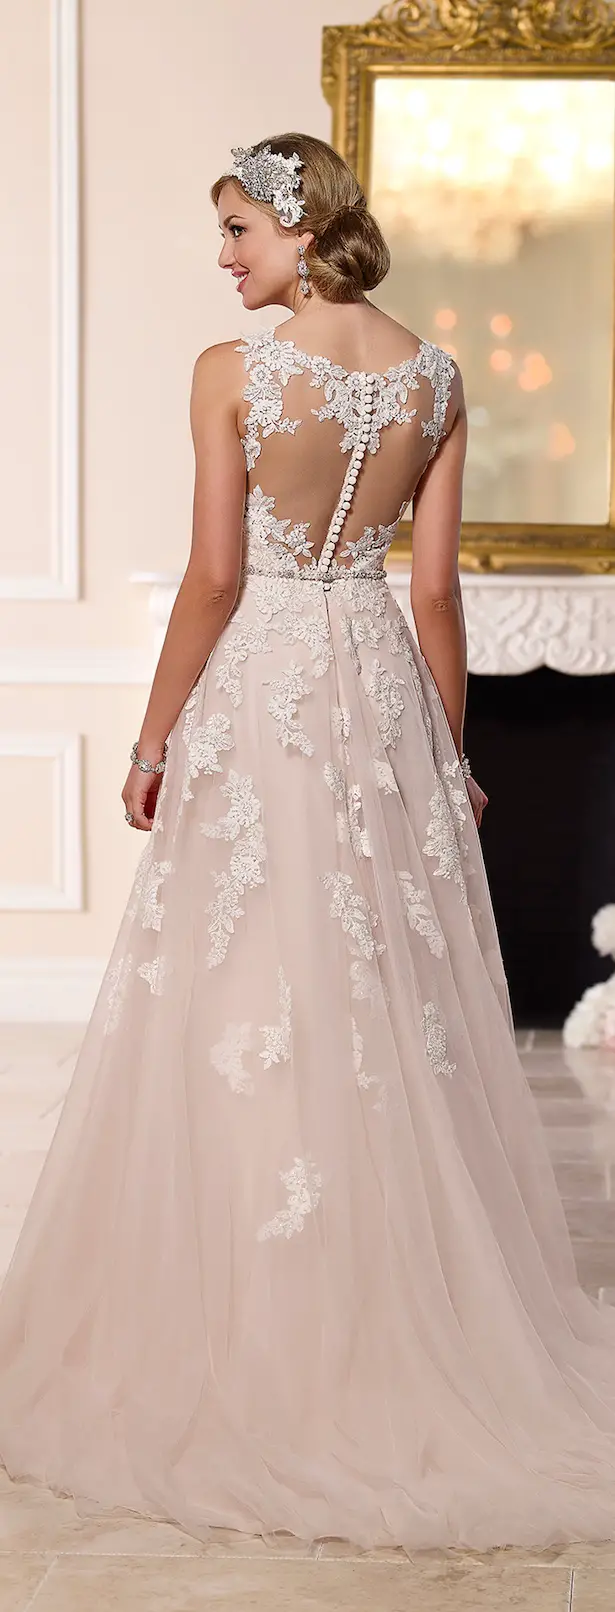 Stella York Spring 2016 Wedding Dress